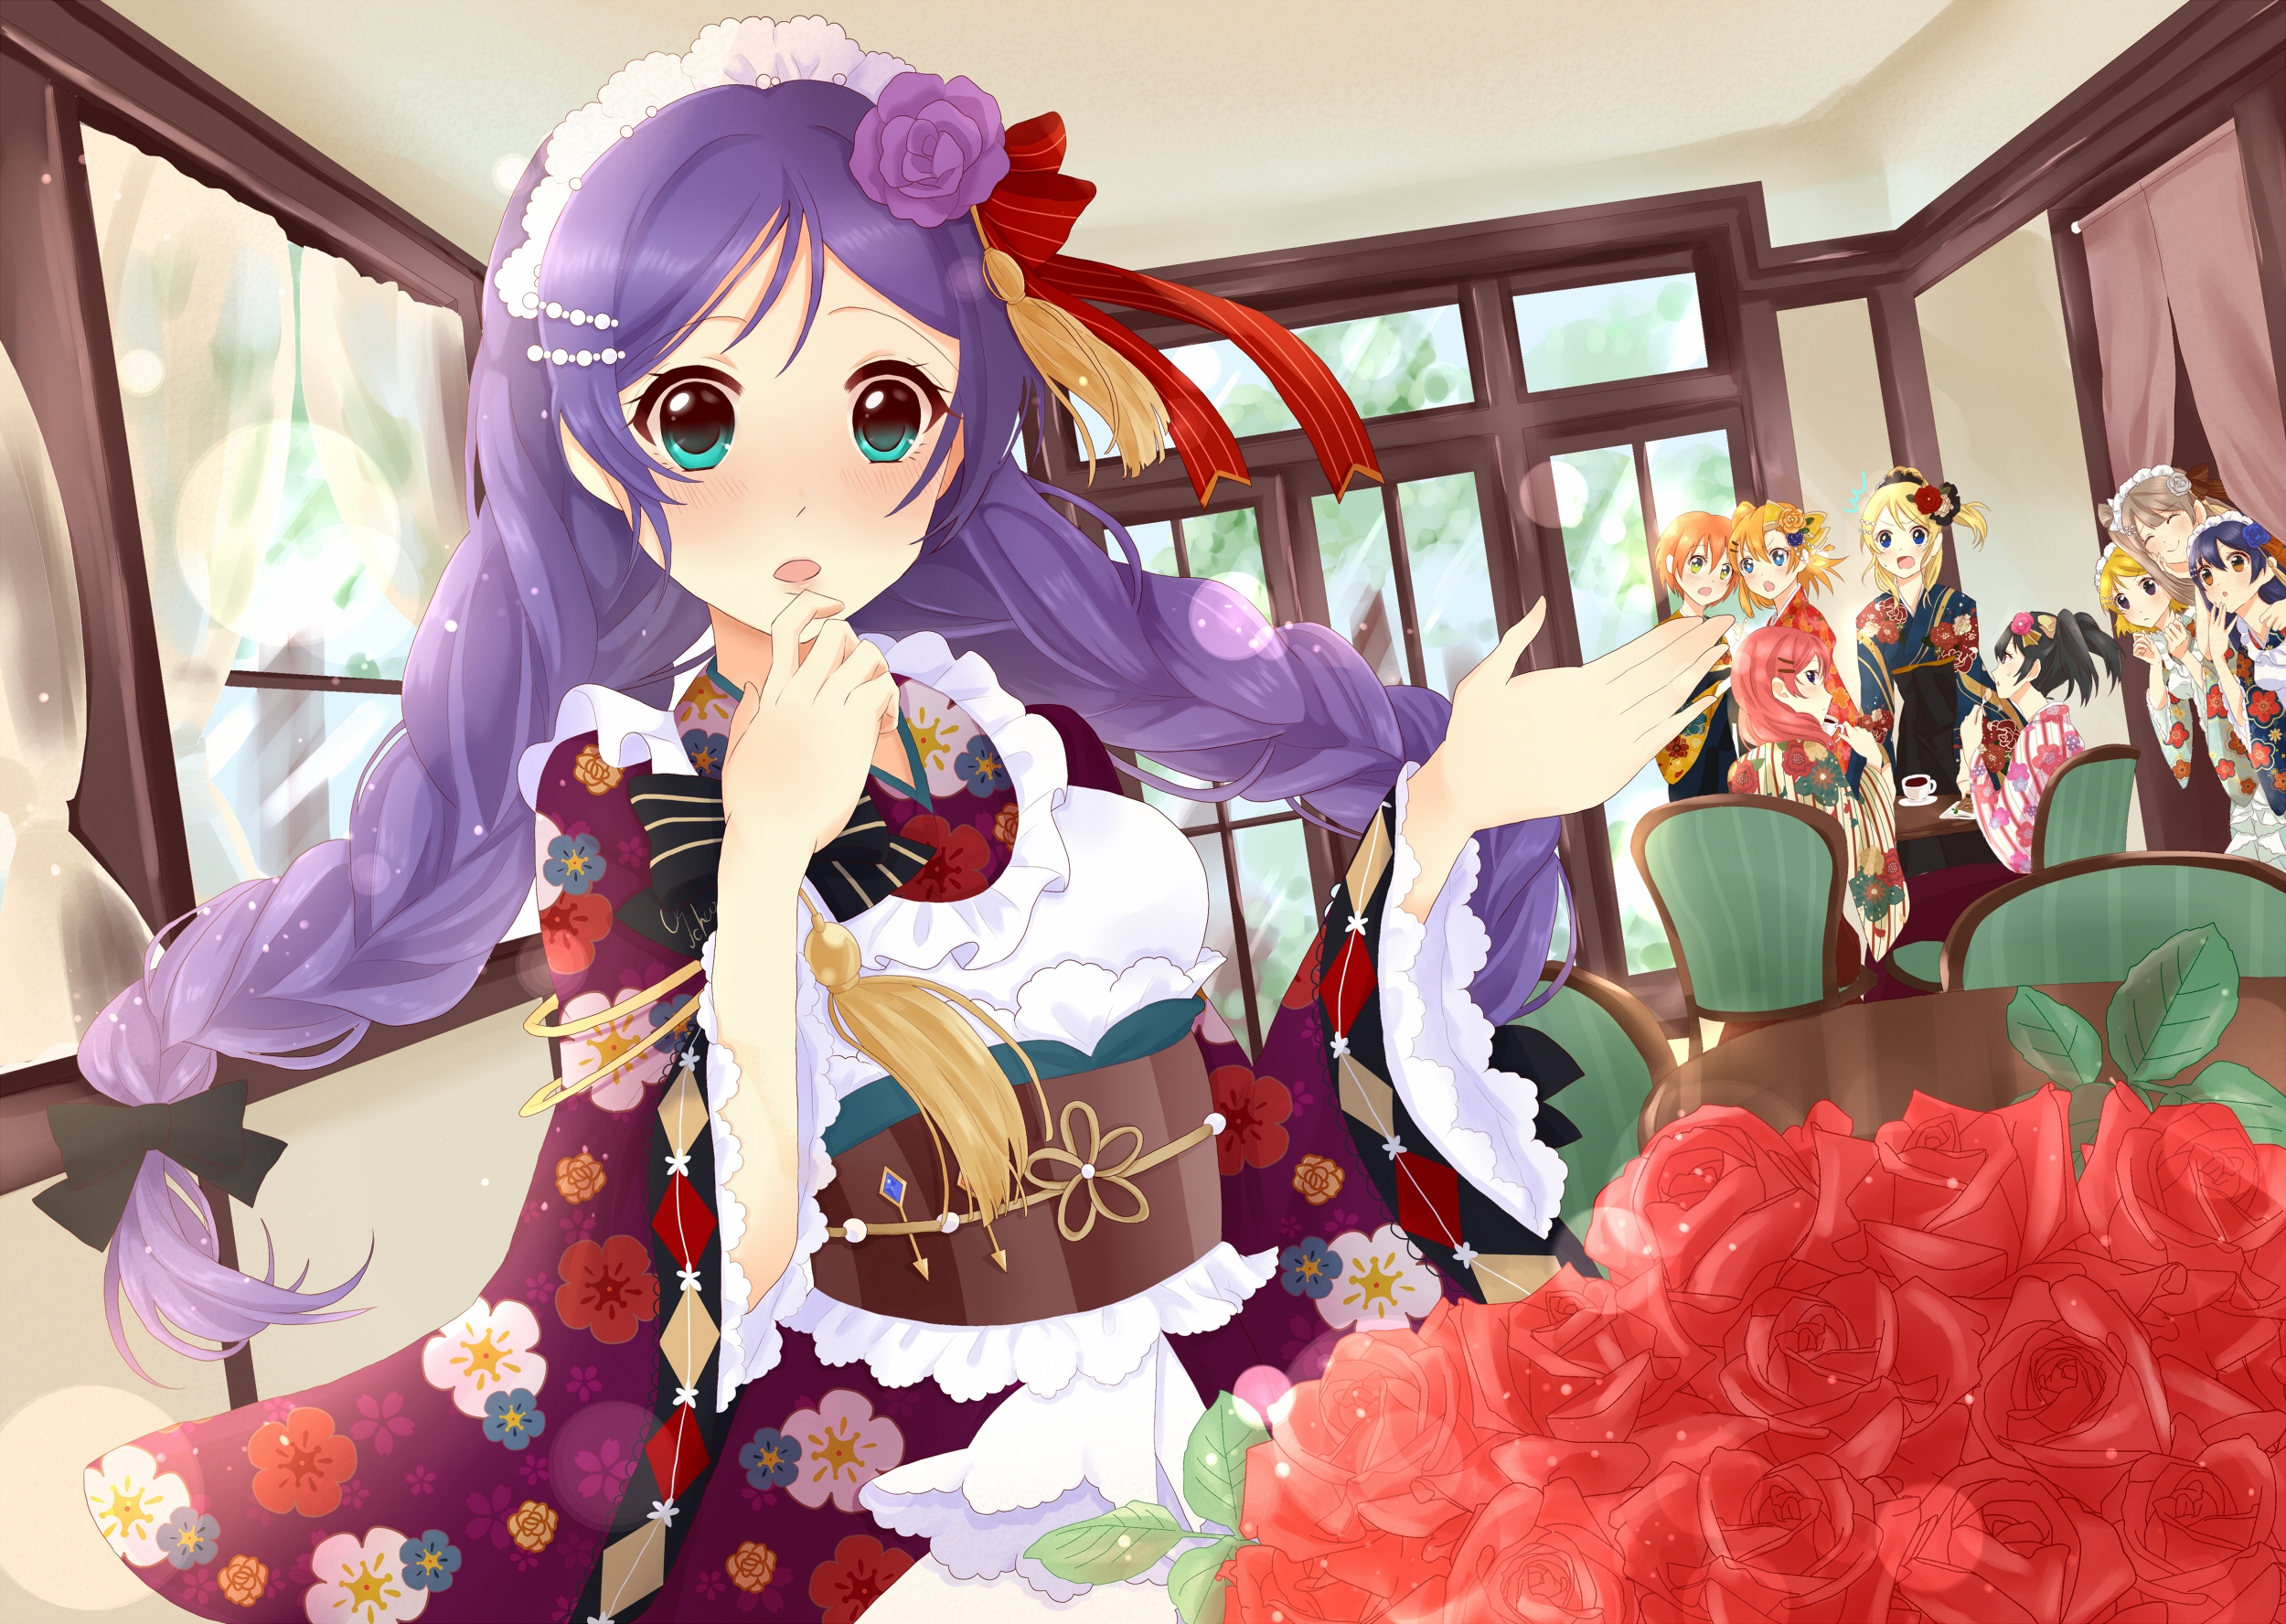 Anime Digital Art Artwork Illustration Anime Girls Maid Maid Outfit Cafe Window Purple Hair Blond Ha 2500x1776